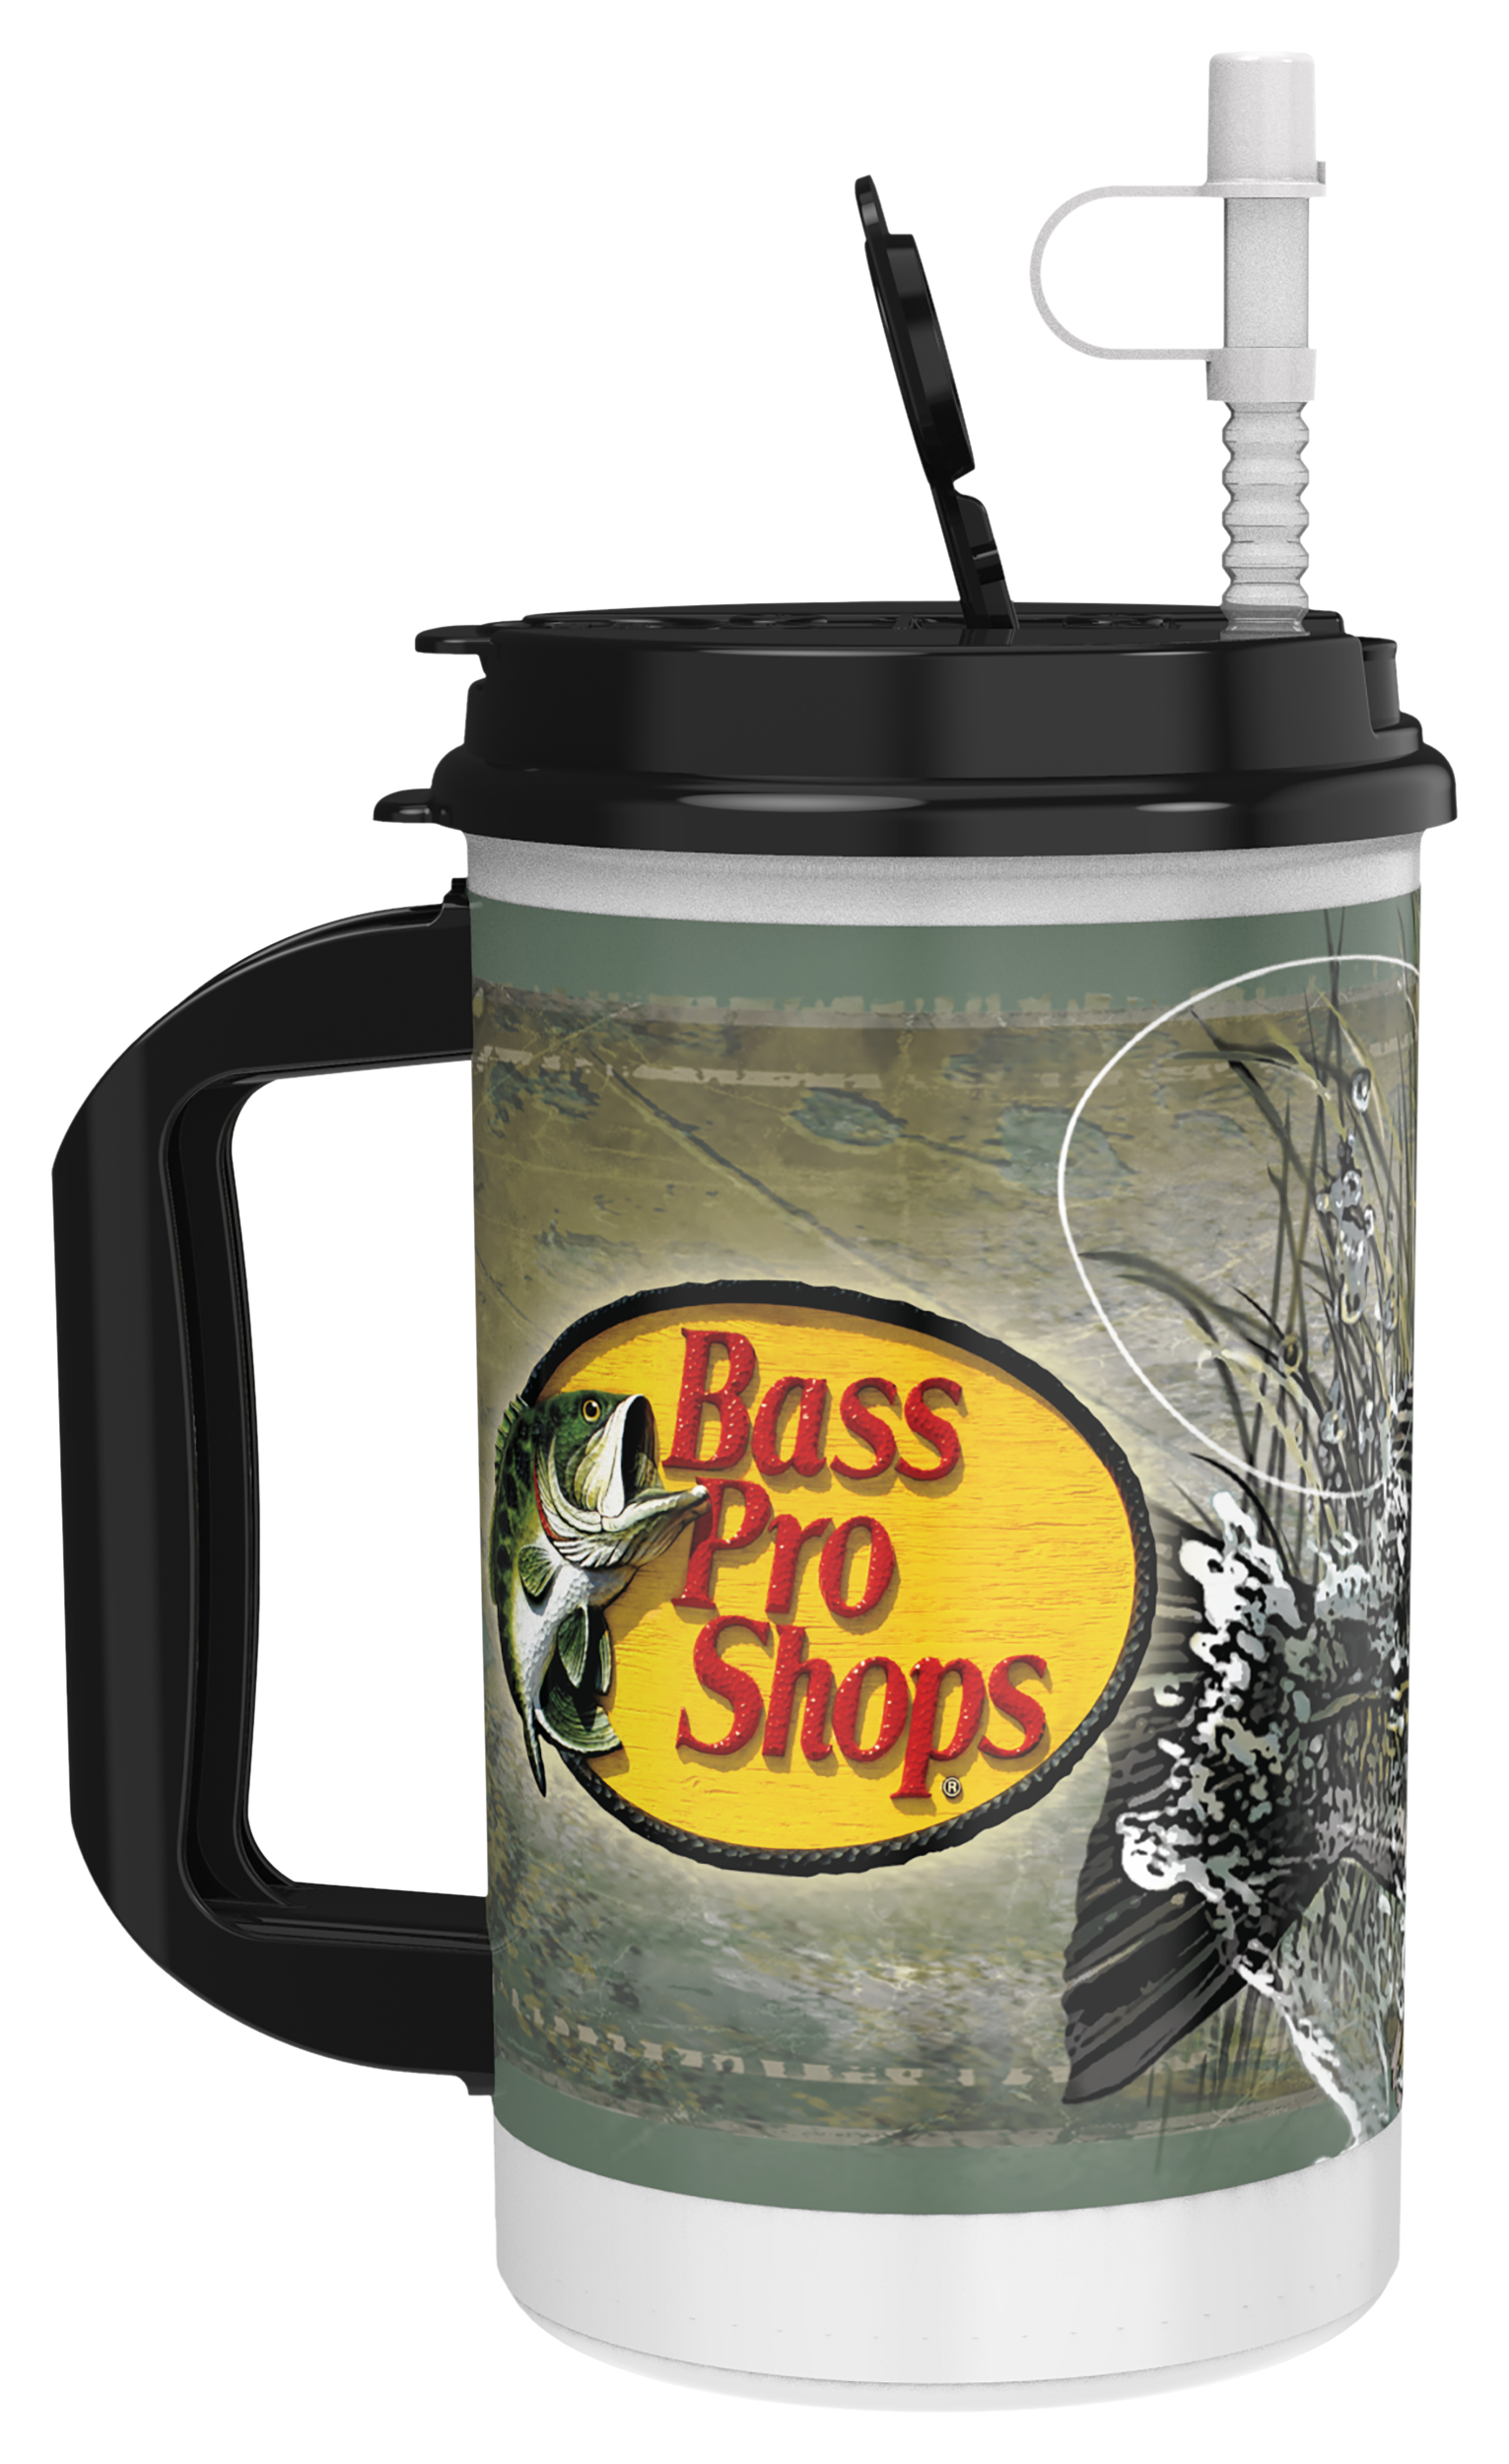 Bass Pro Shops 24-oz. Insulated Mug - Black